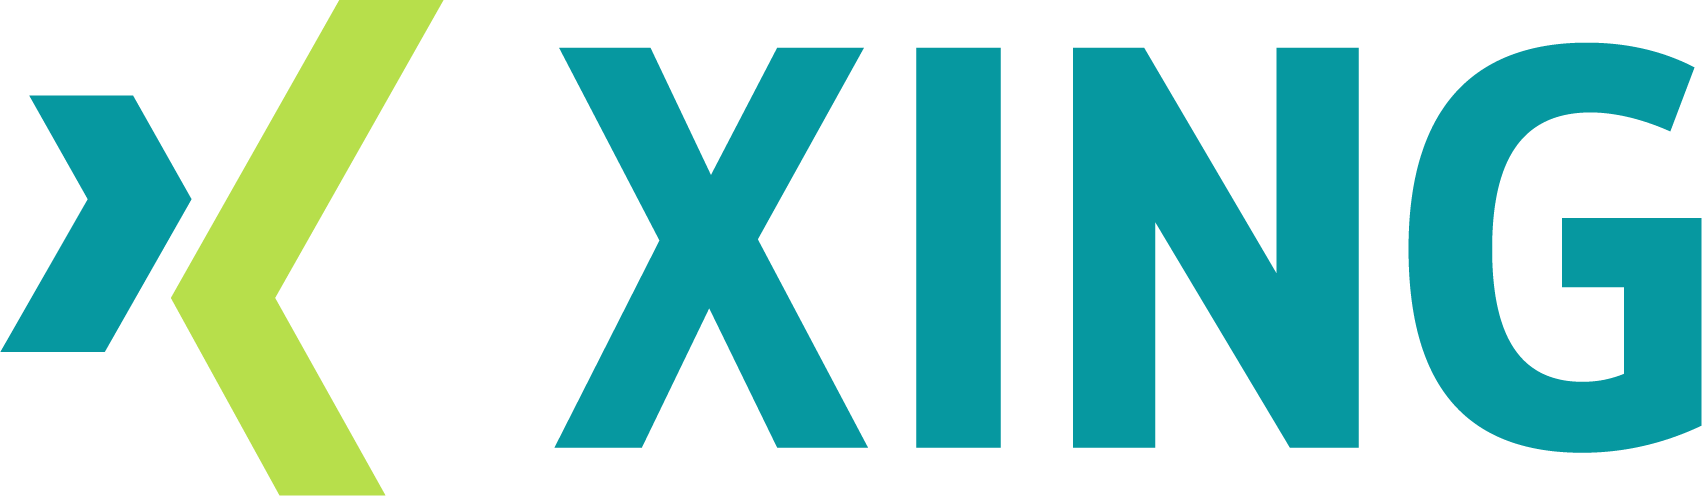 PaxLife Innovations GmbH